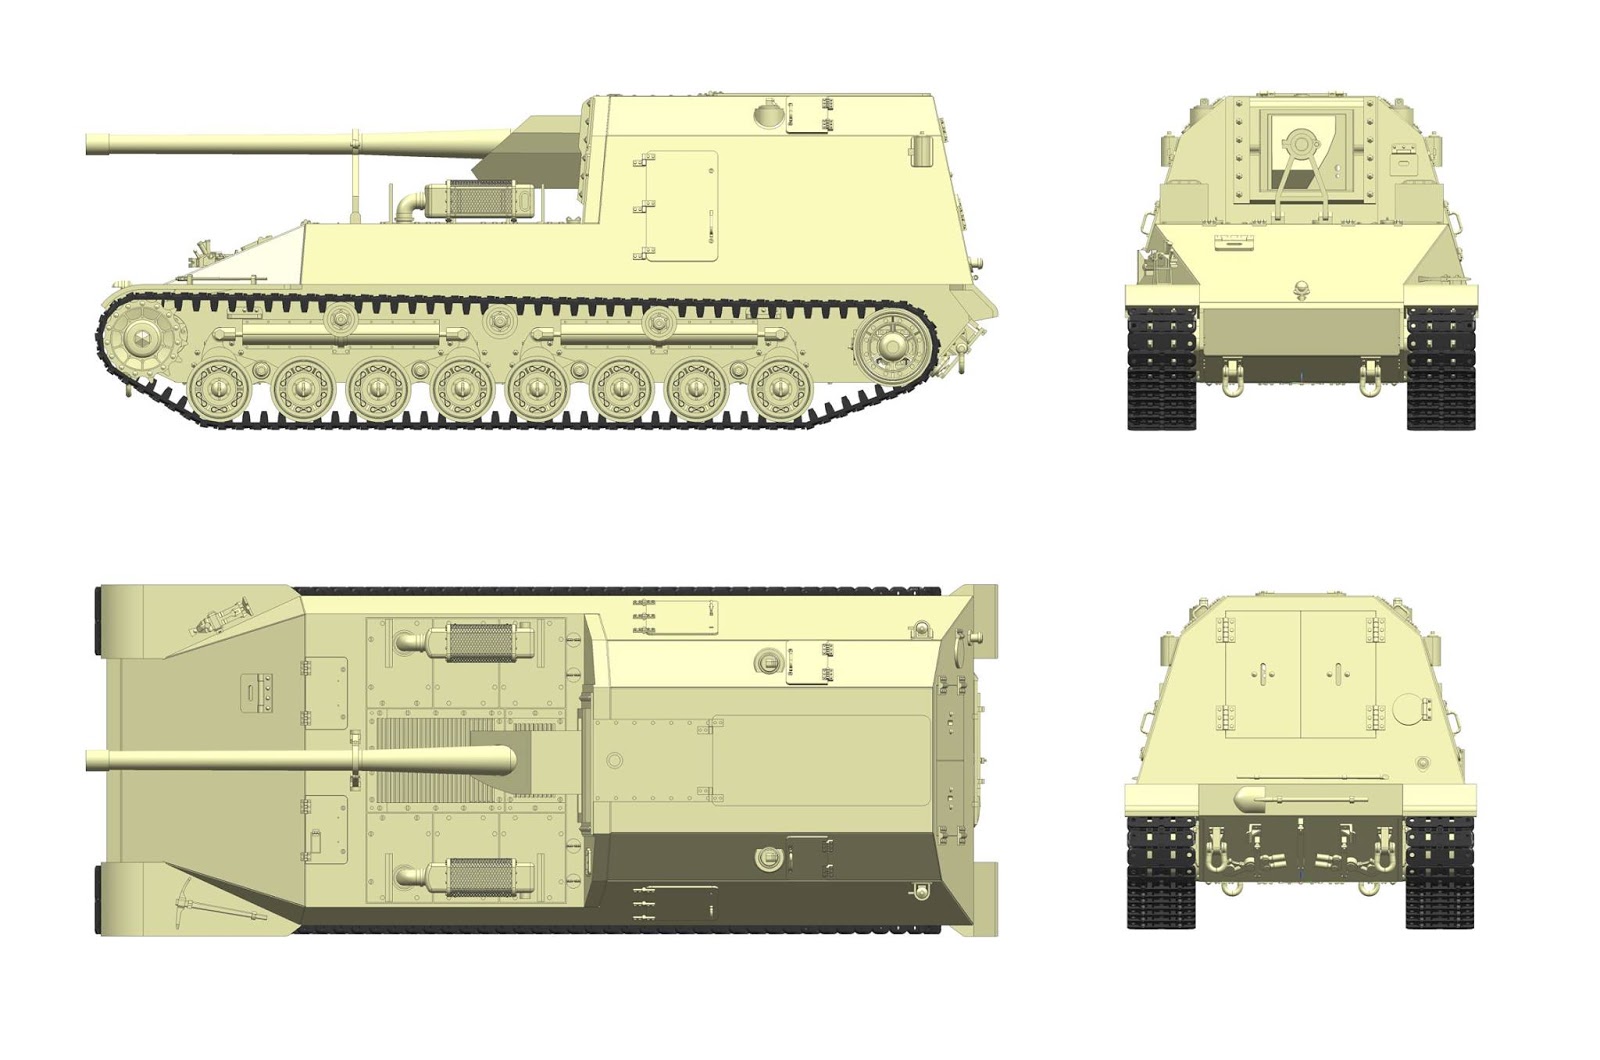 Хори 3 танк. Type 5 ho-RI. Type 5 ho-RI II. Type 5 (ho-RI 1). Танк ho RI Type 3.